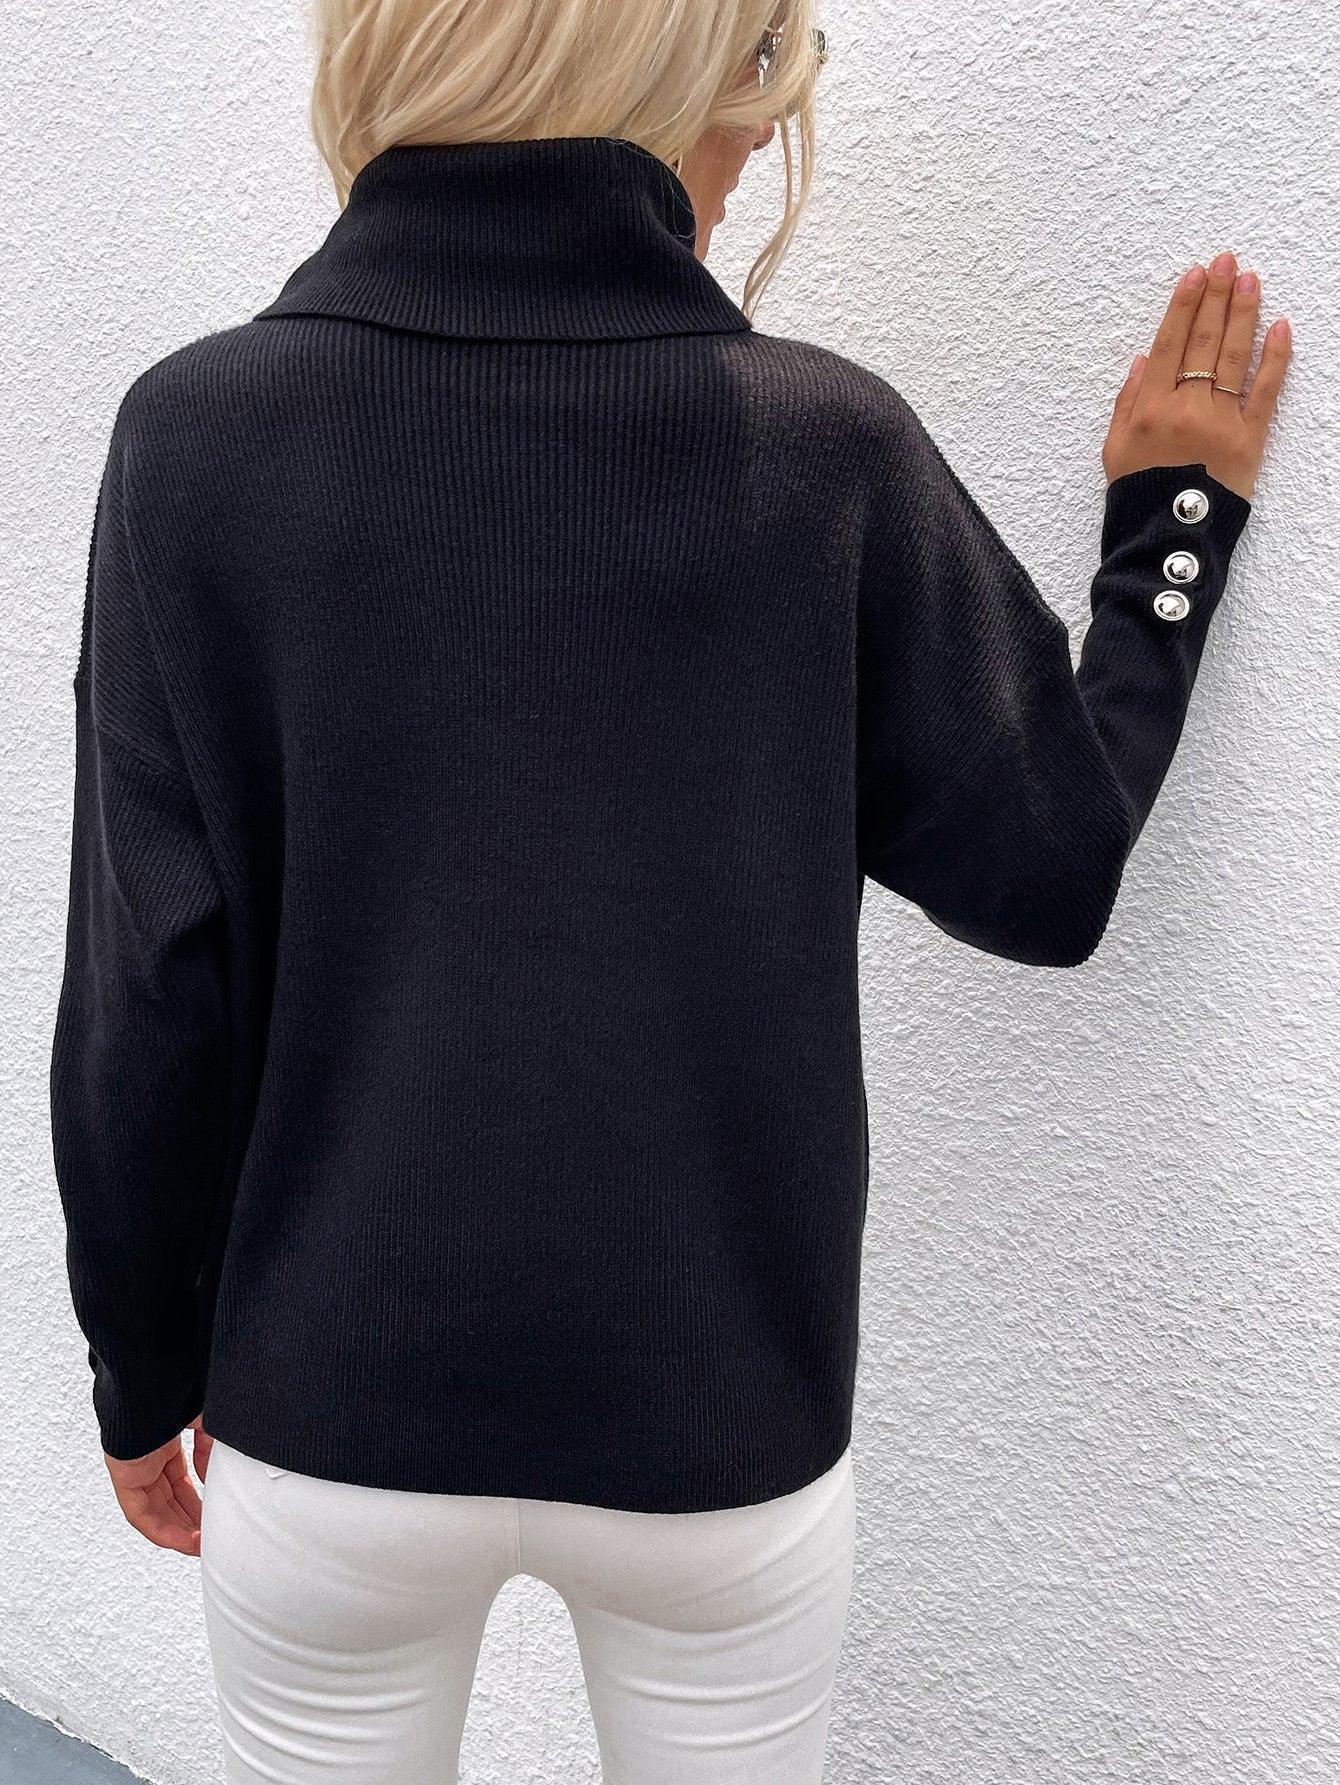 Ultra-Chic Knit Turtleneck Sweater - MXSTUDIO.COM